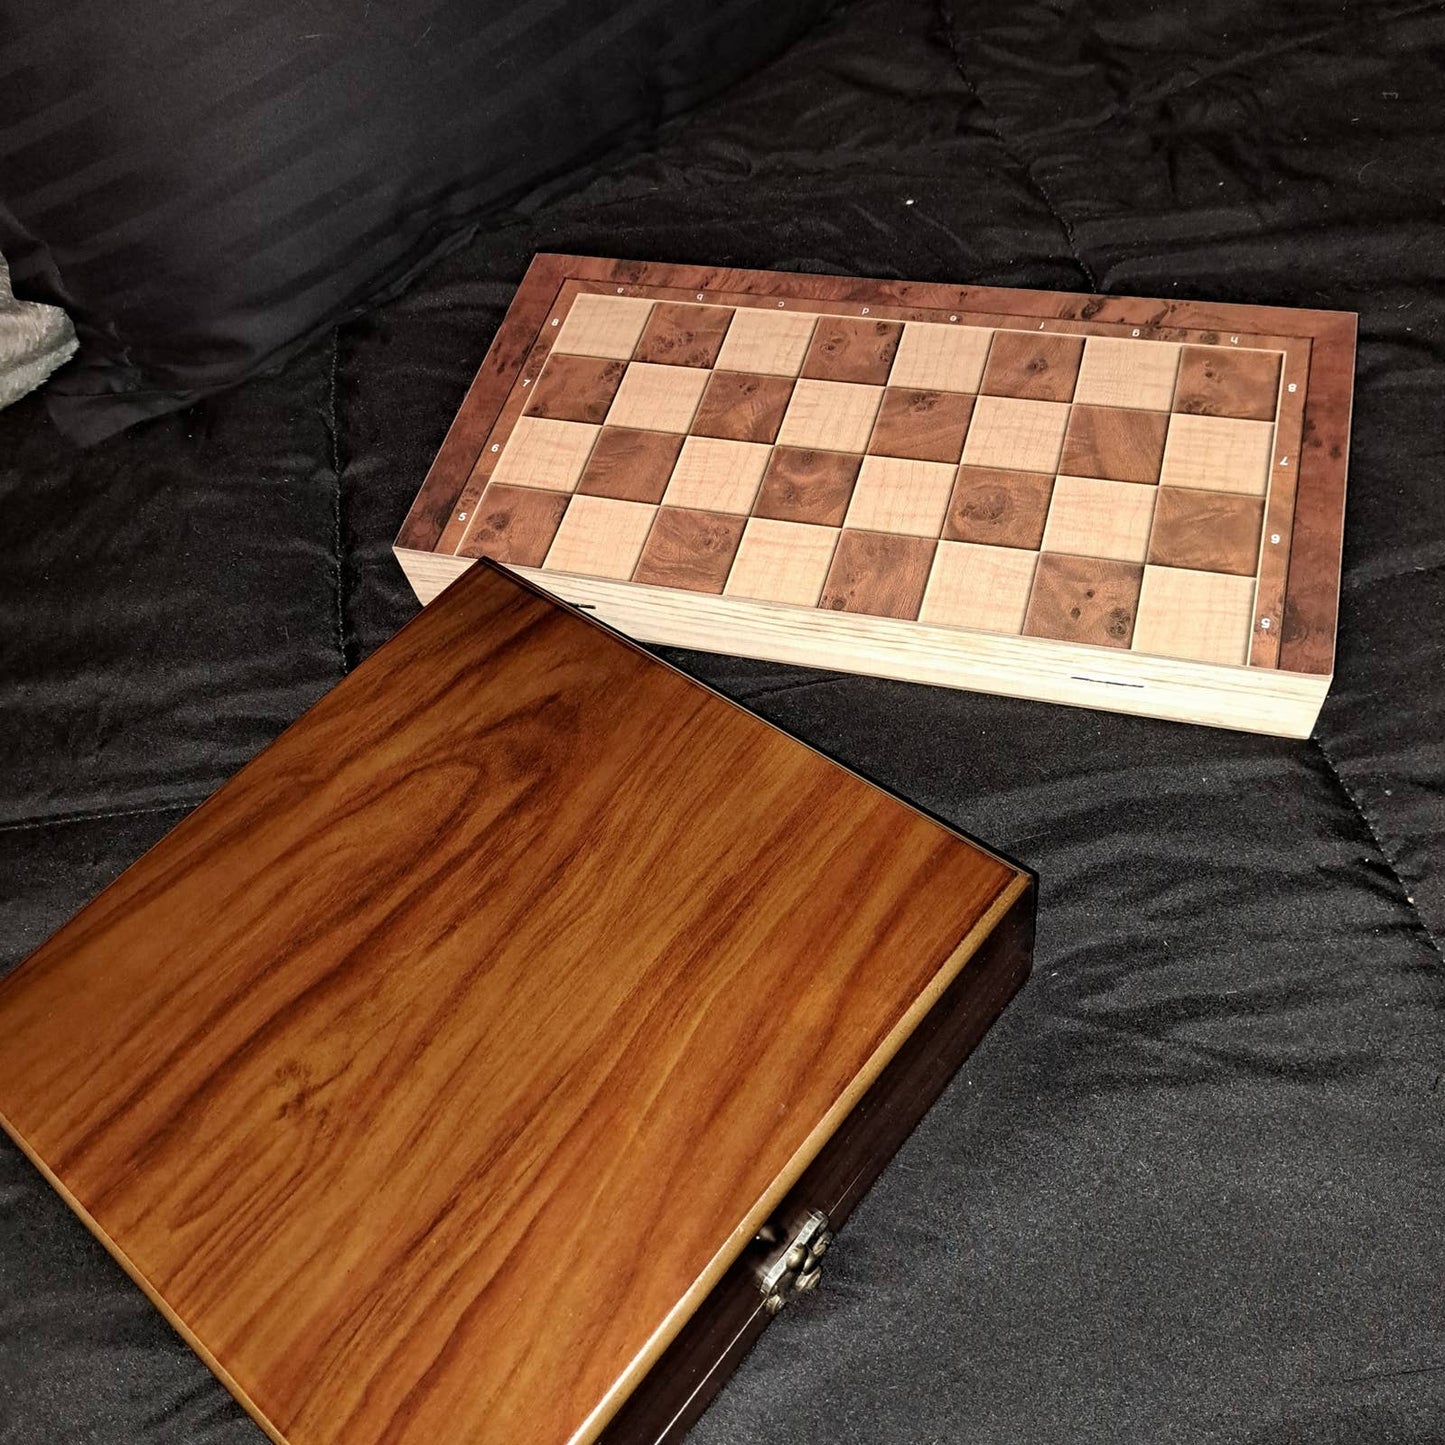 Wood Box sets - Chess Dominos Poker Dice Backgammon Checkers